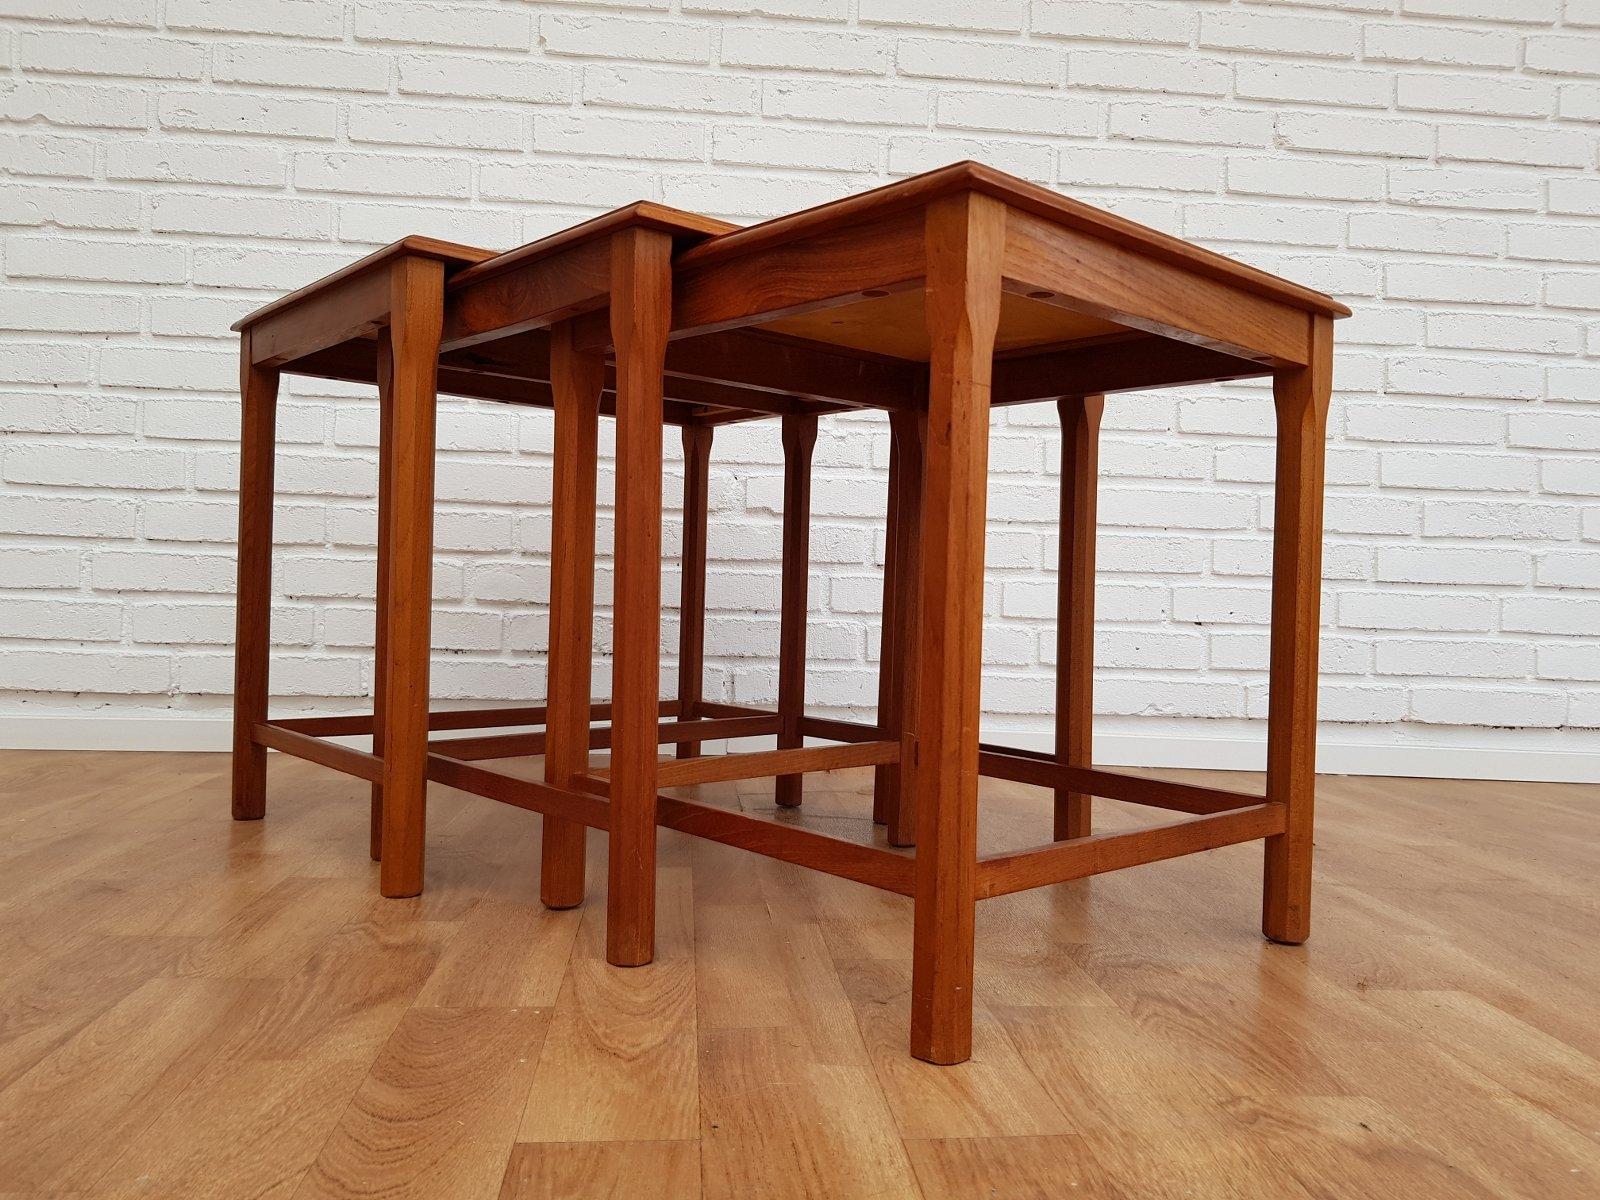 70s, Nesting Table, Danish Design, Hand-Painted Ceramic Tiles, Teak Wood For Sale 8